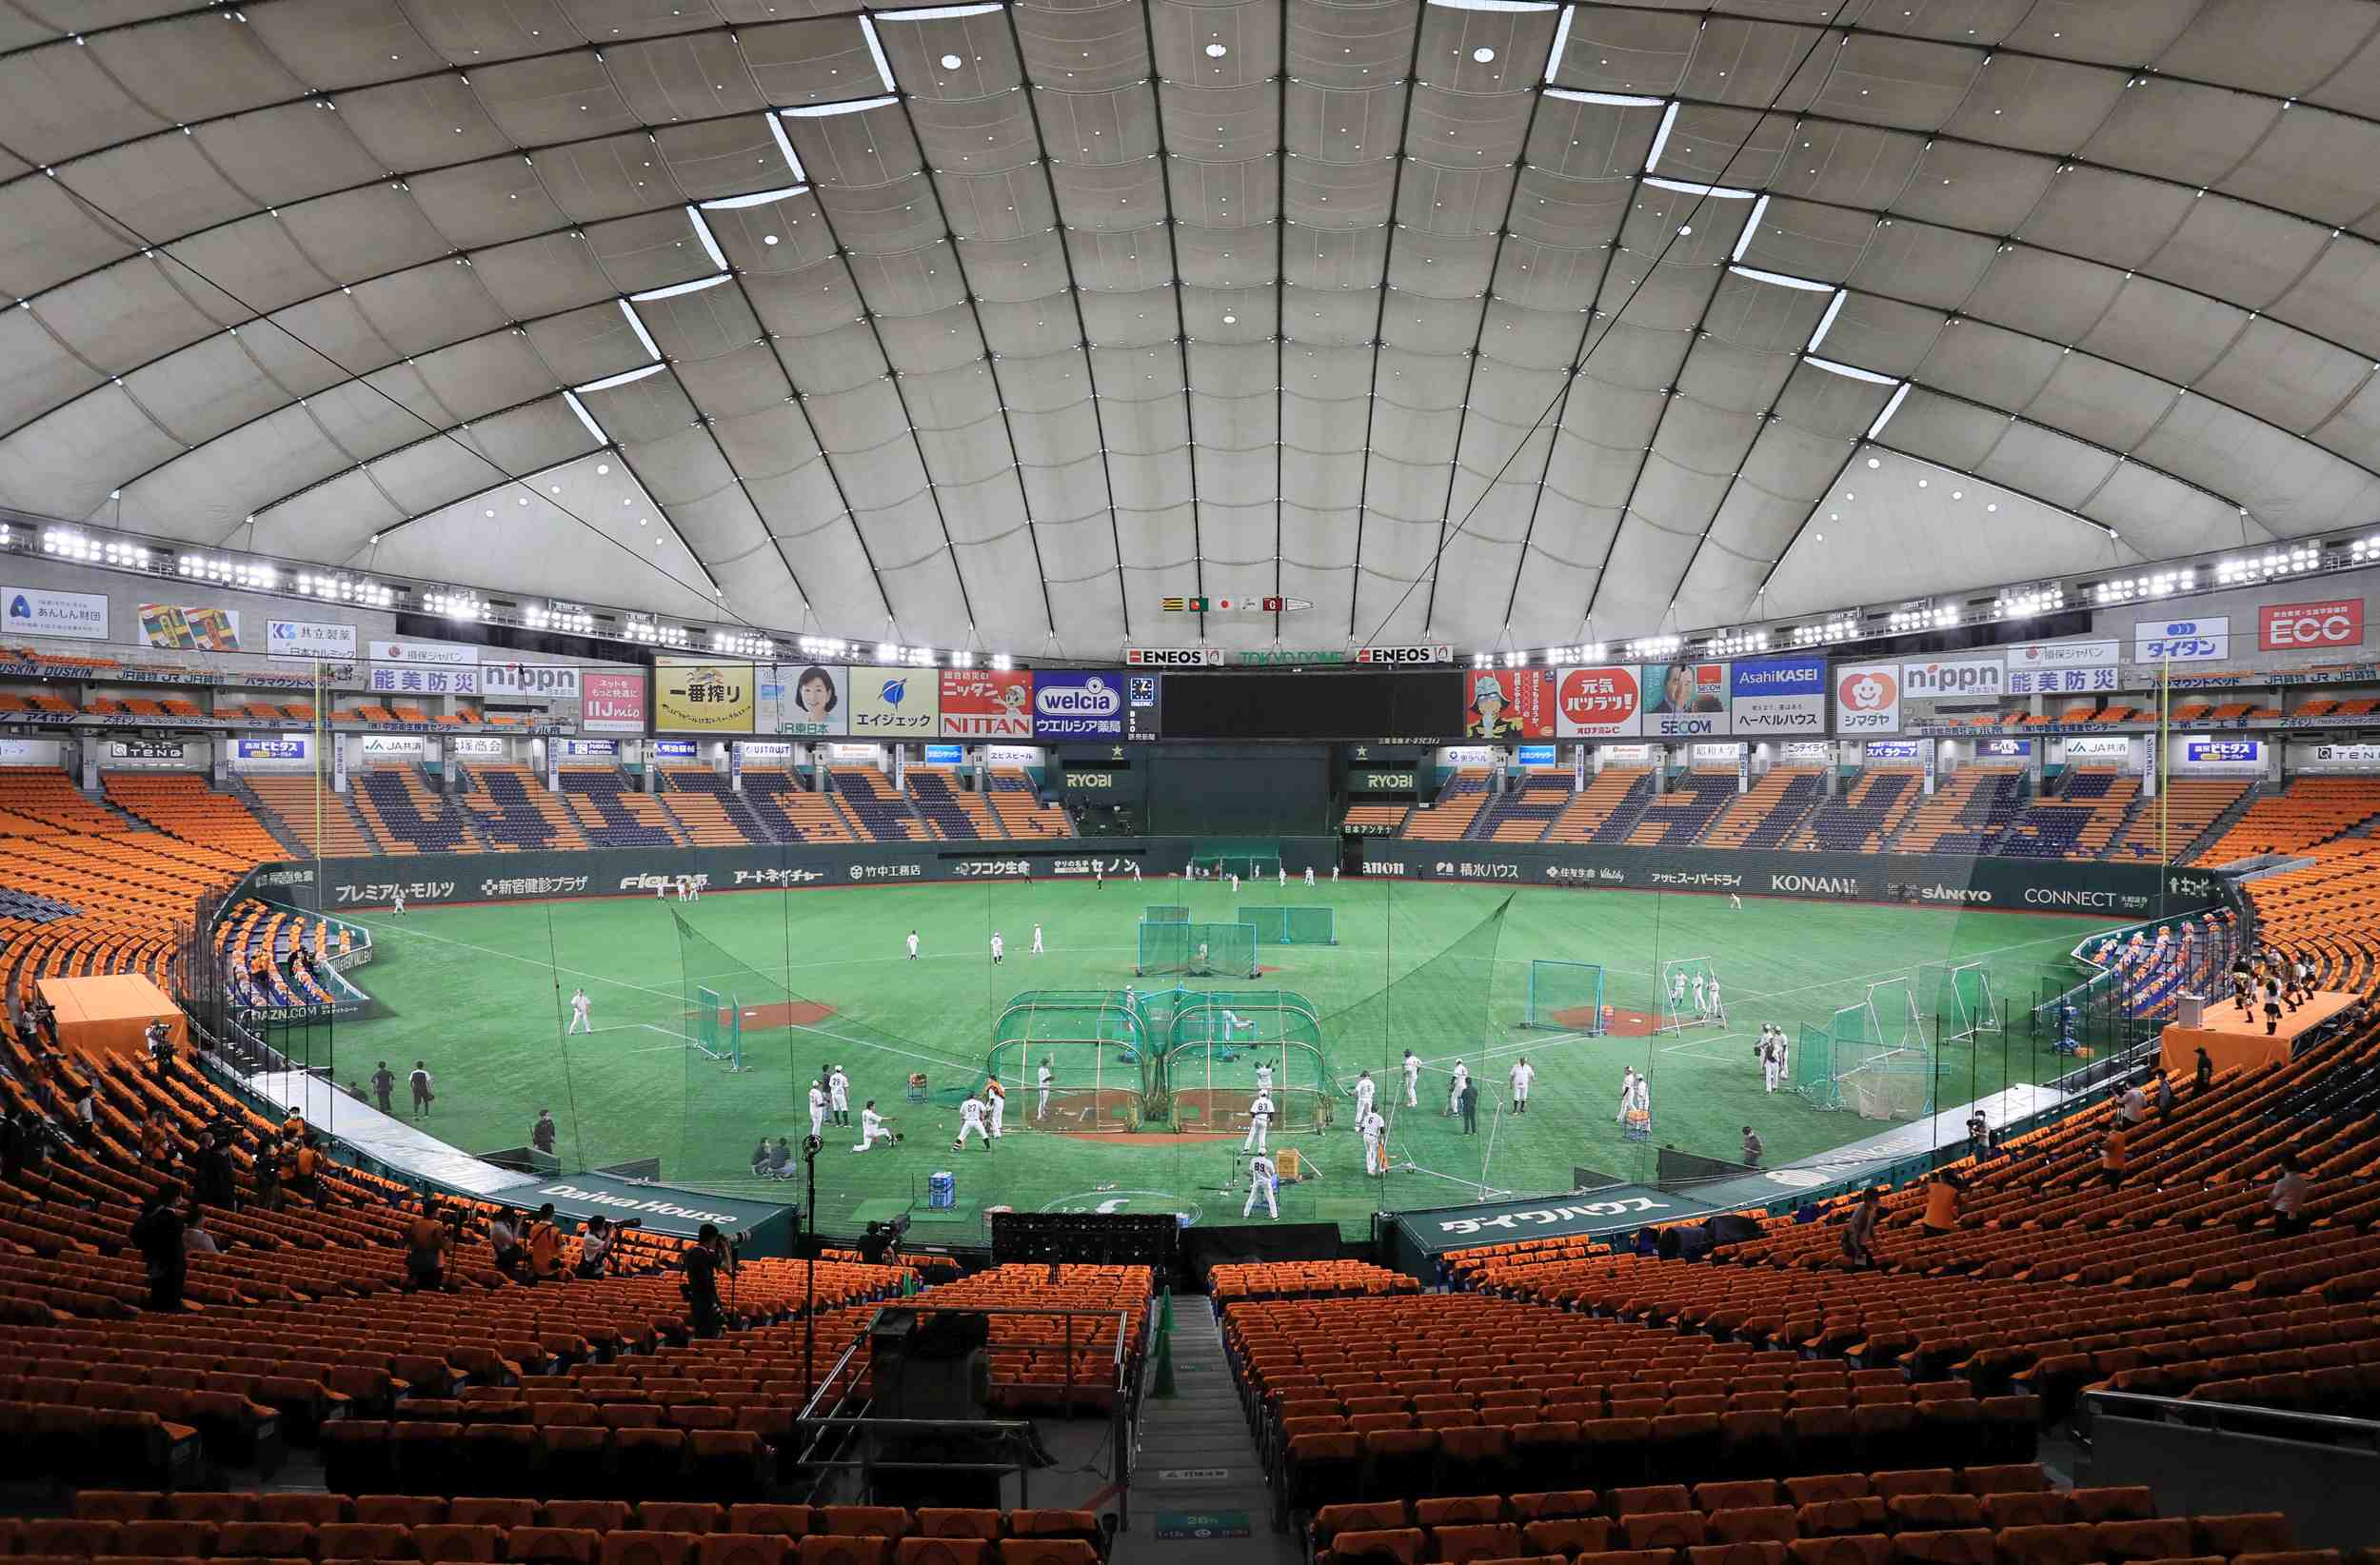 Coming with Giants Baseball Game at Tokyo Dome Japan 2